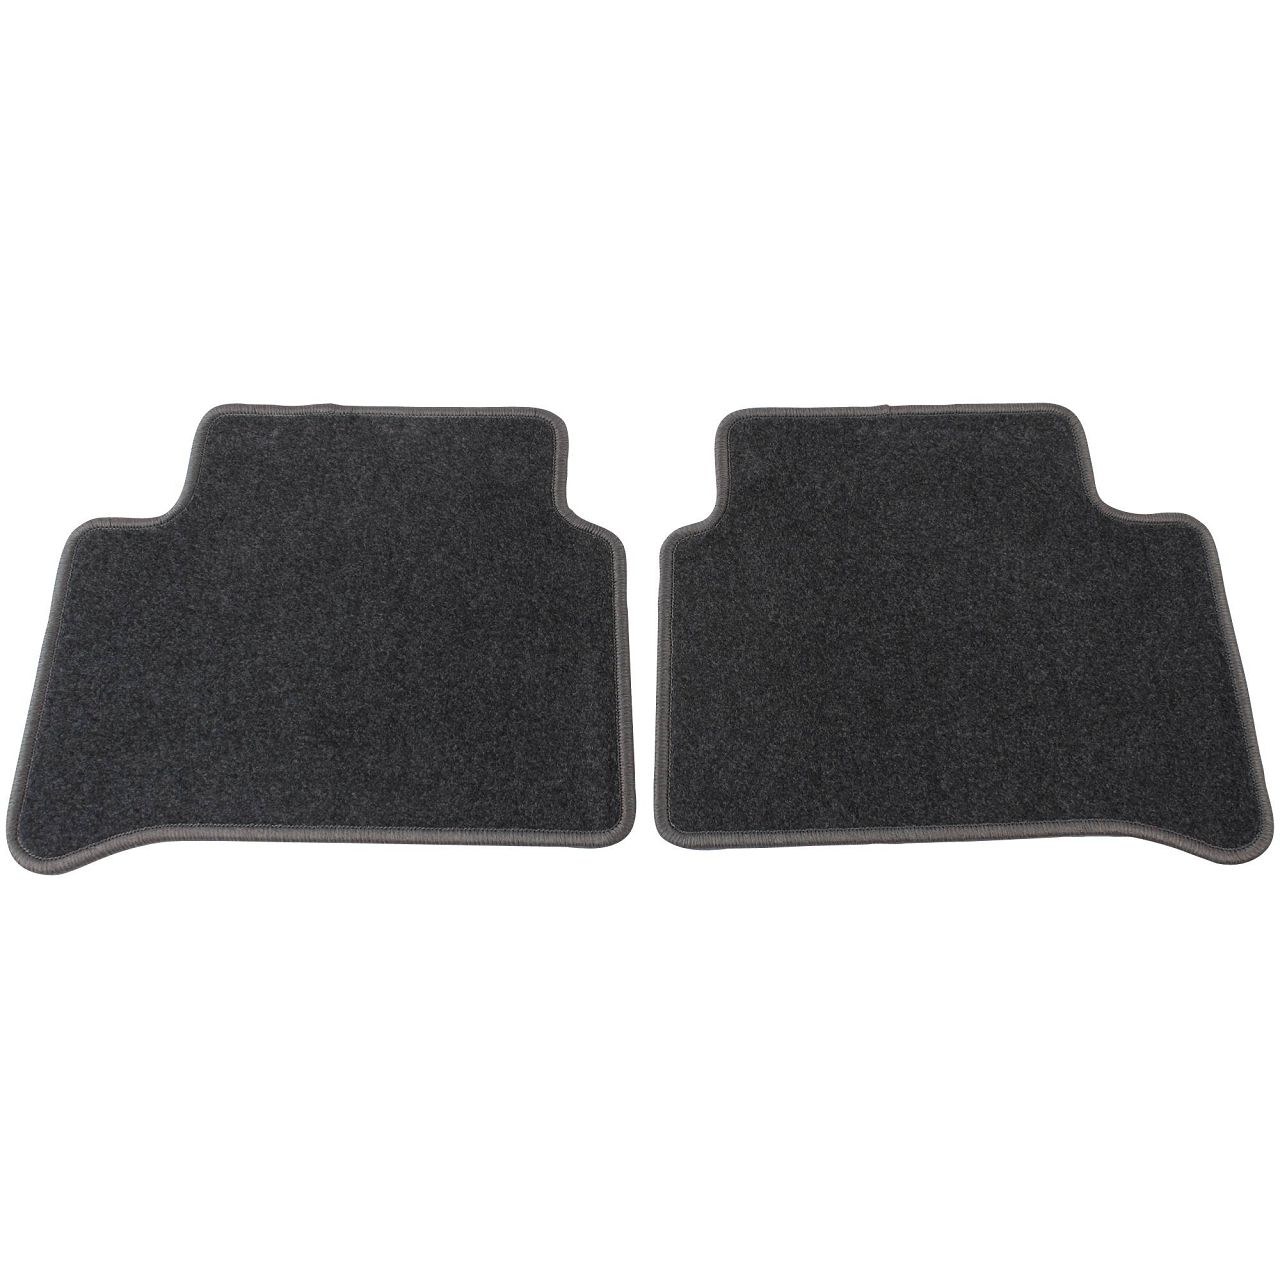 SCHÖNEK Veloursmatten Textilmatten Fußmatten MERCEDS E-Klasse W211 S211 4-teilig